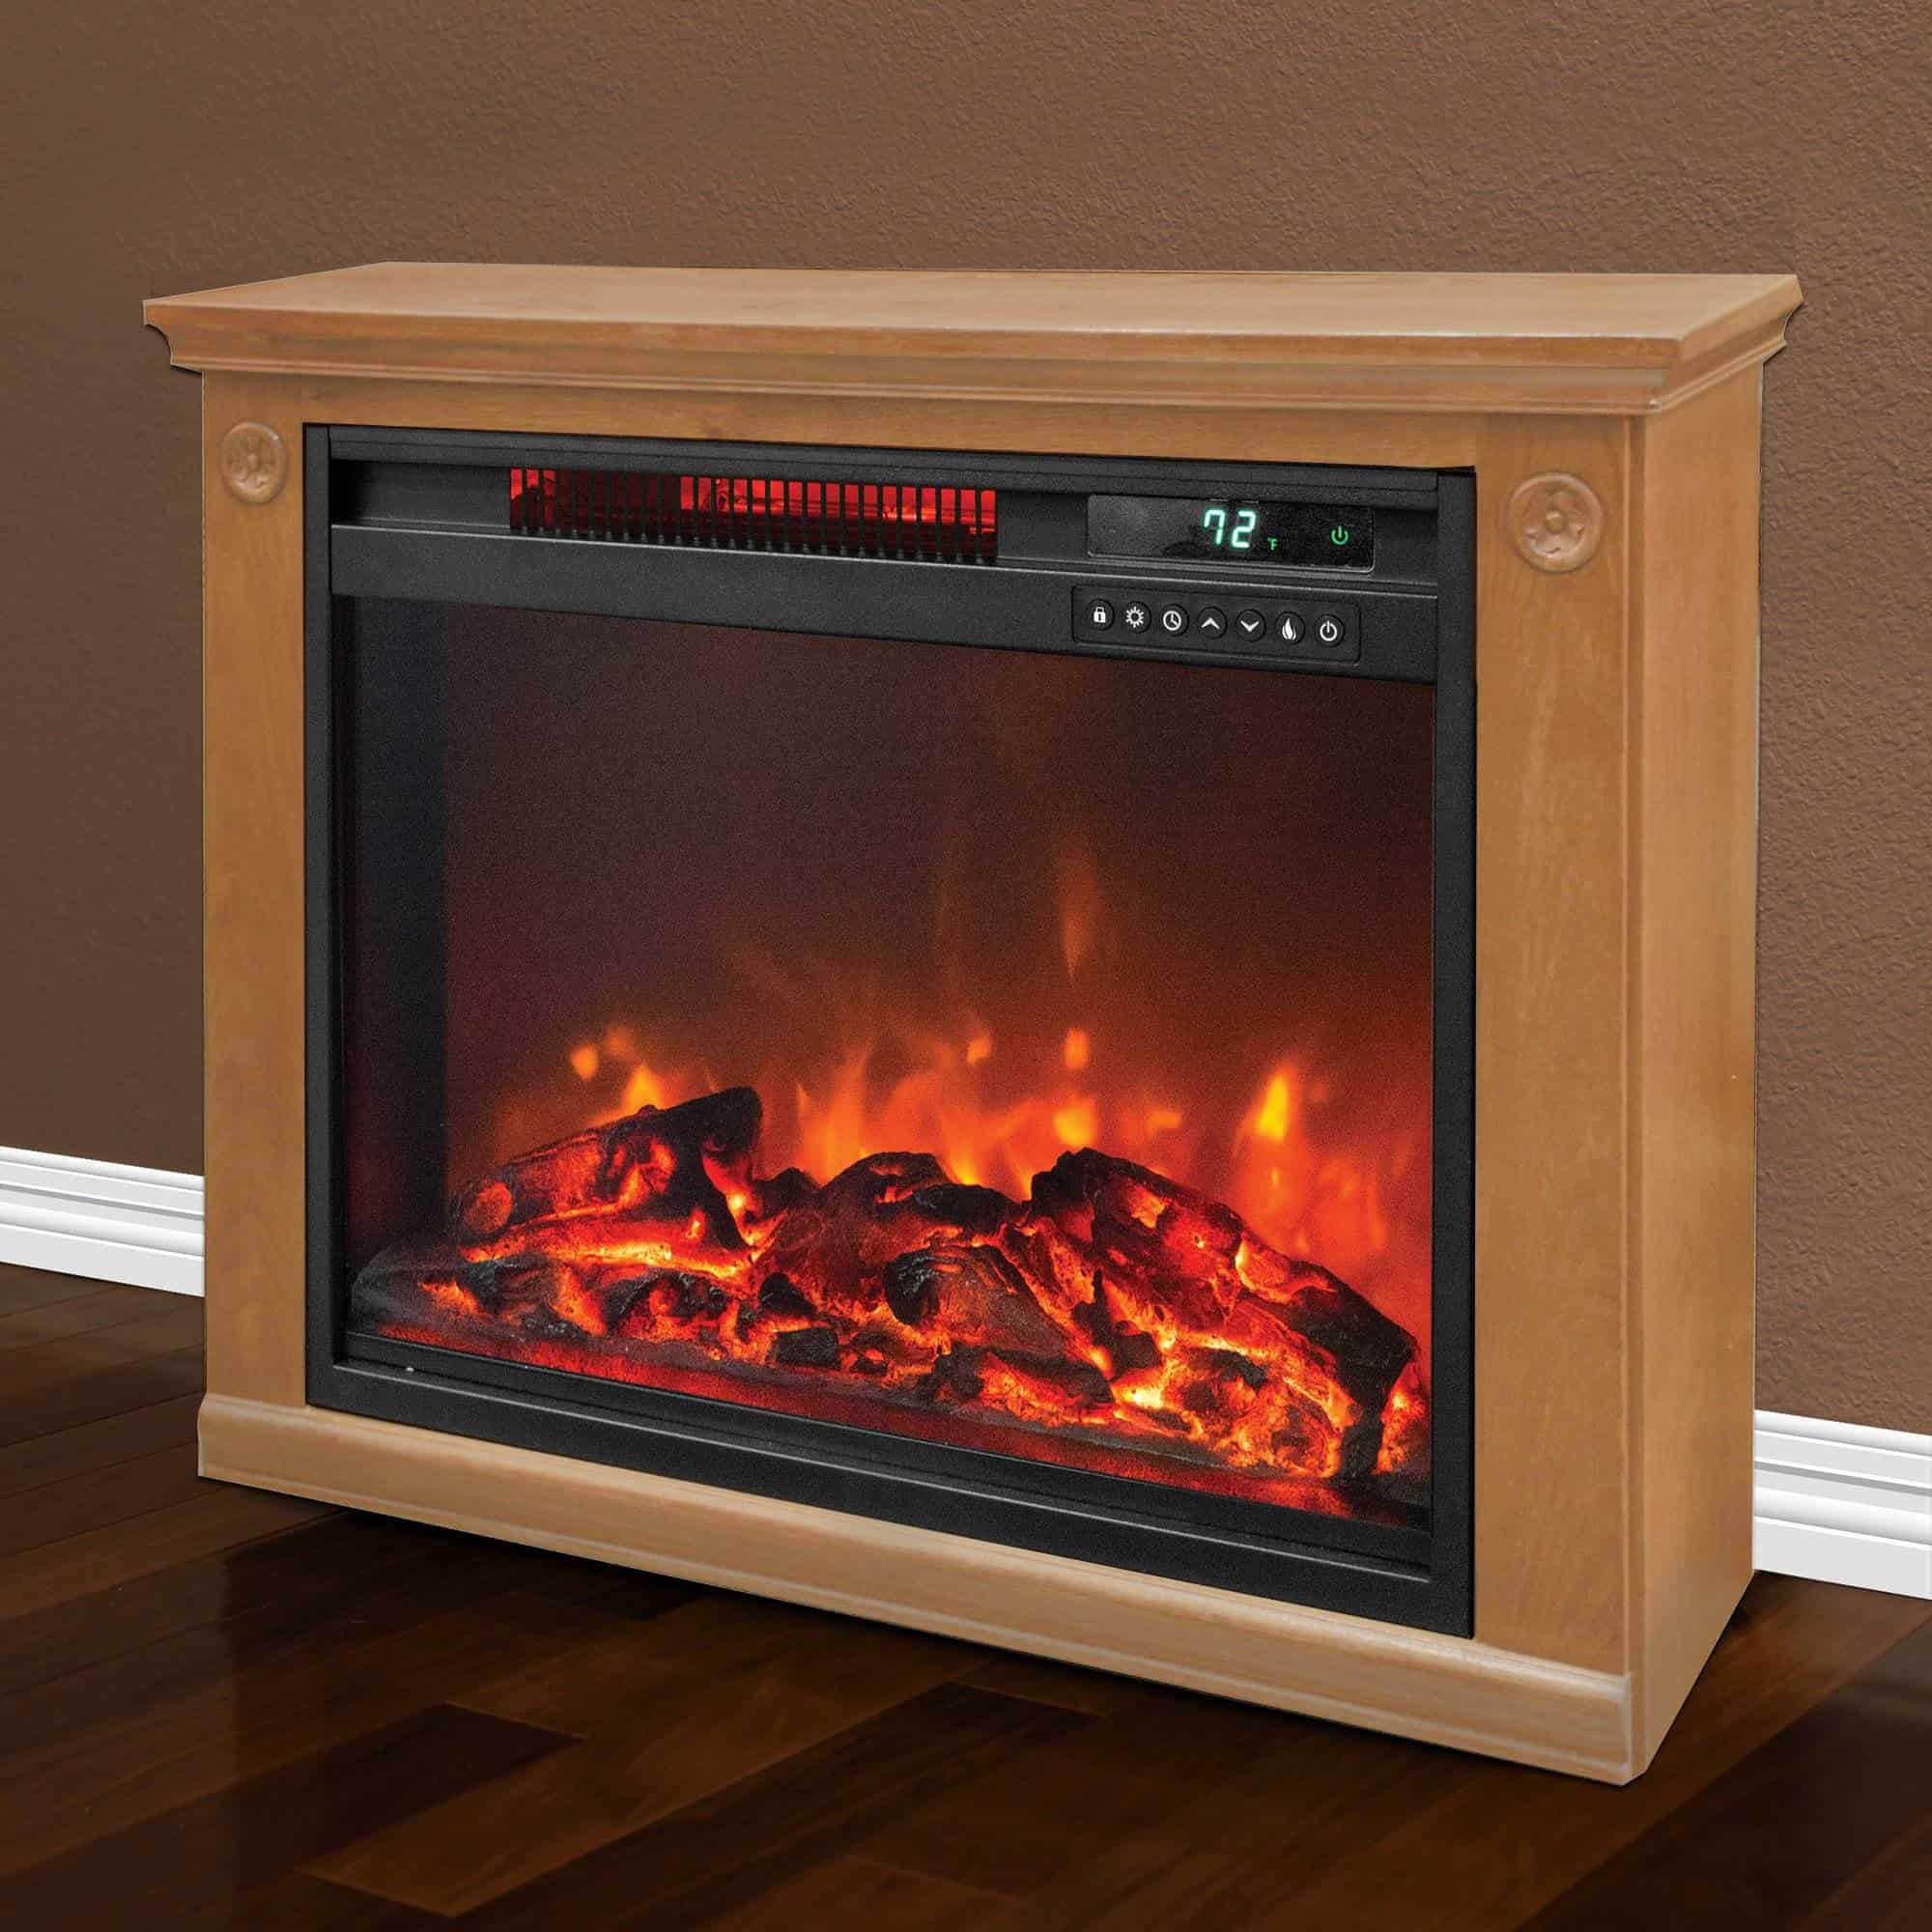 LifeSmart 1500 Watt Large Infrared Quartz Electric Portable Fireplace Heater